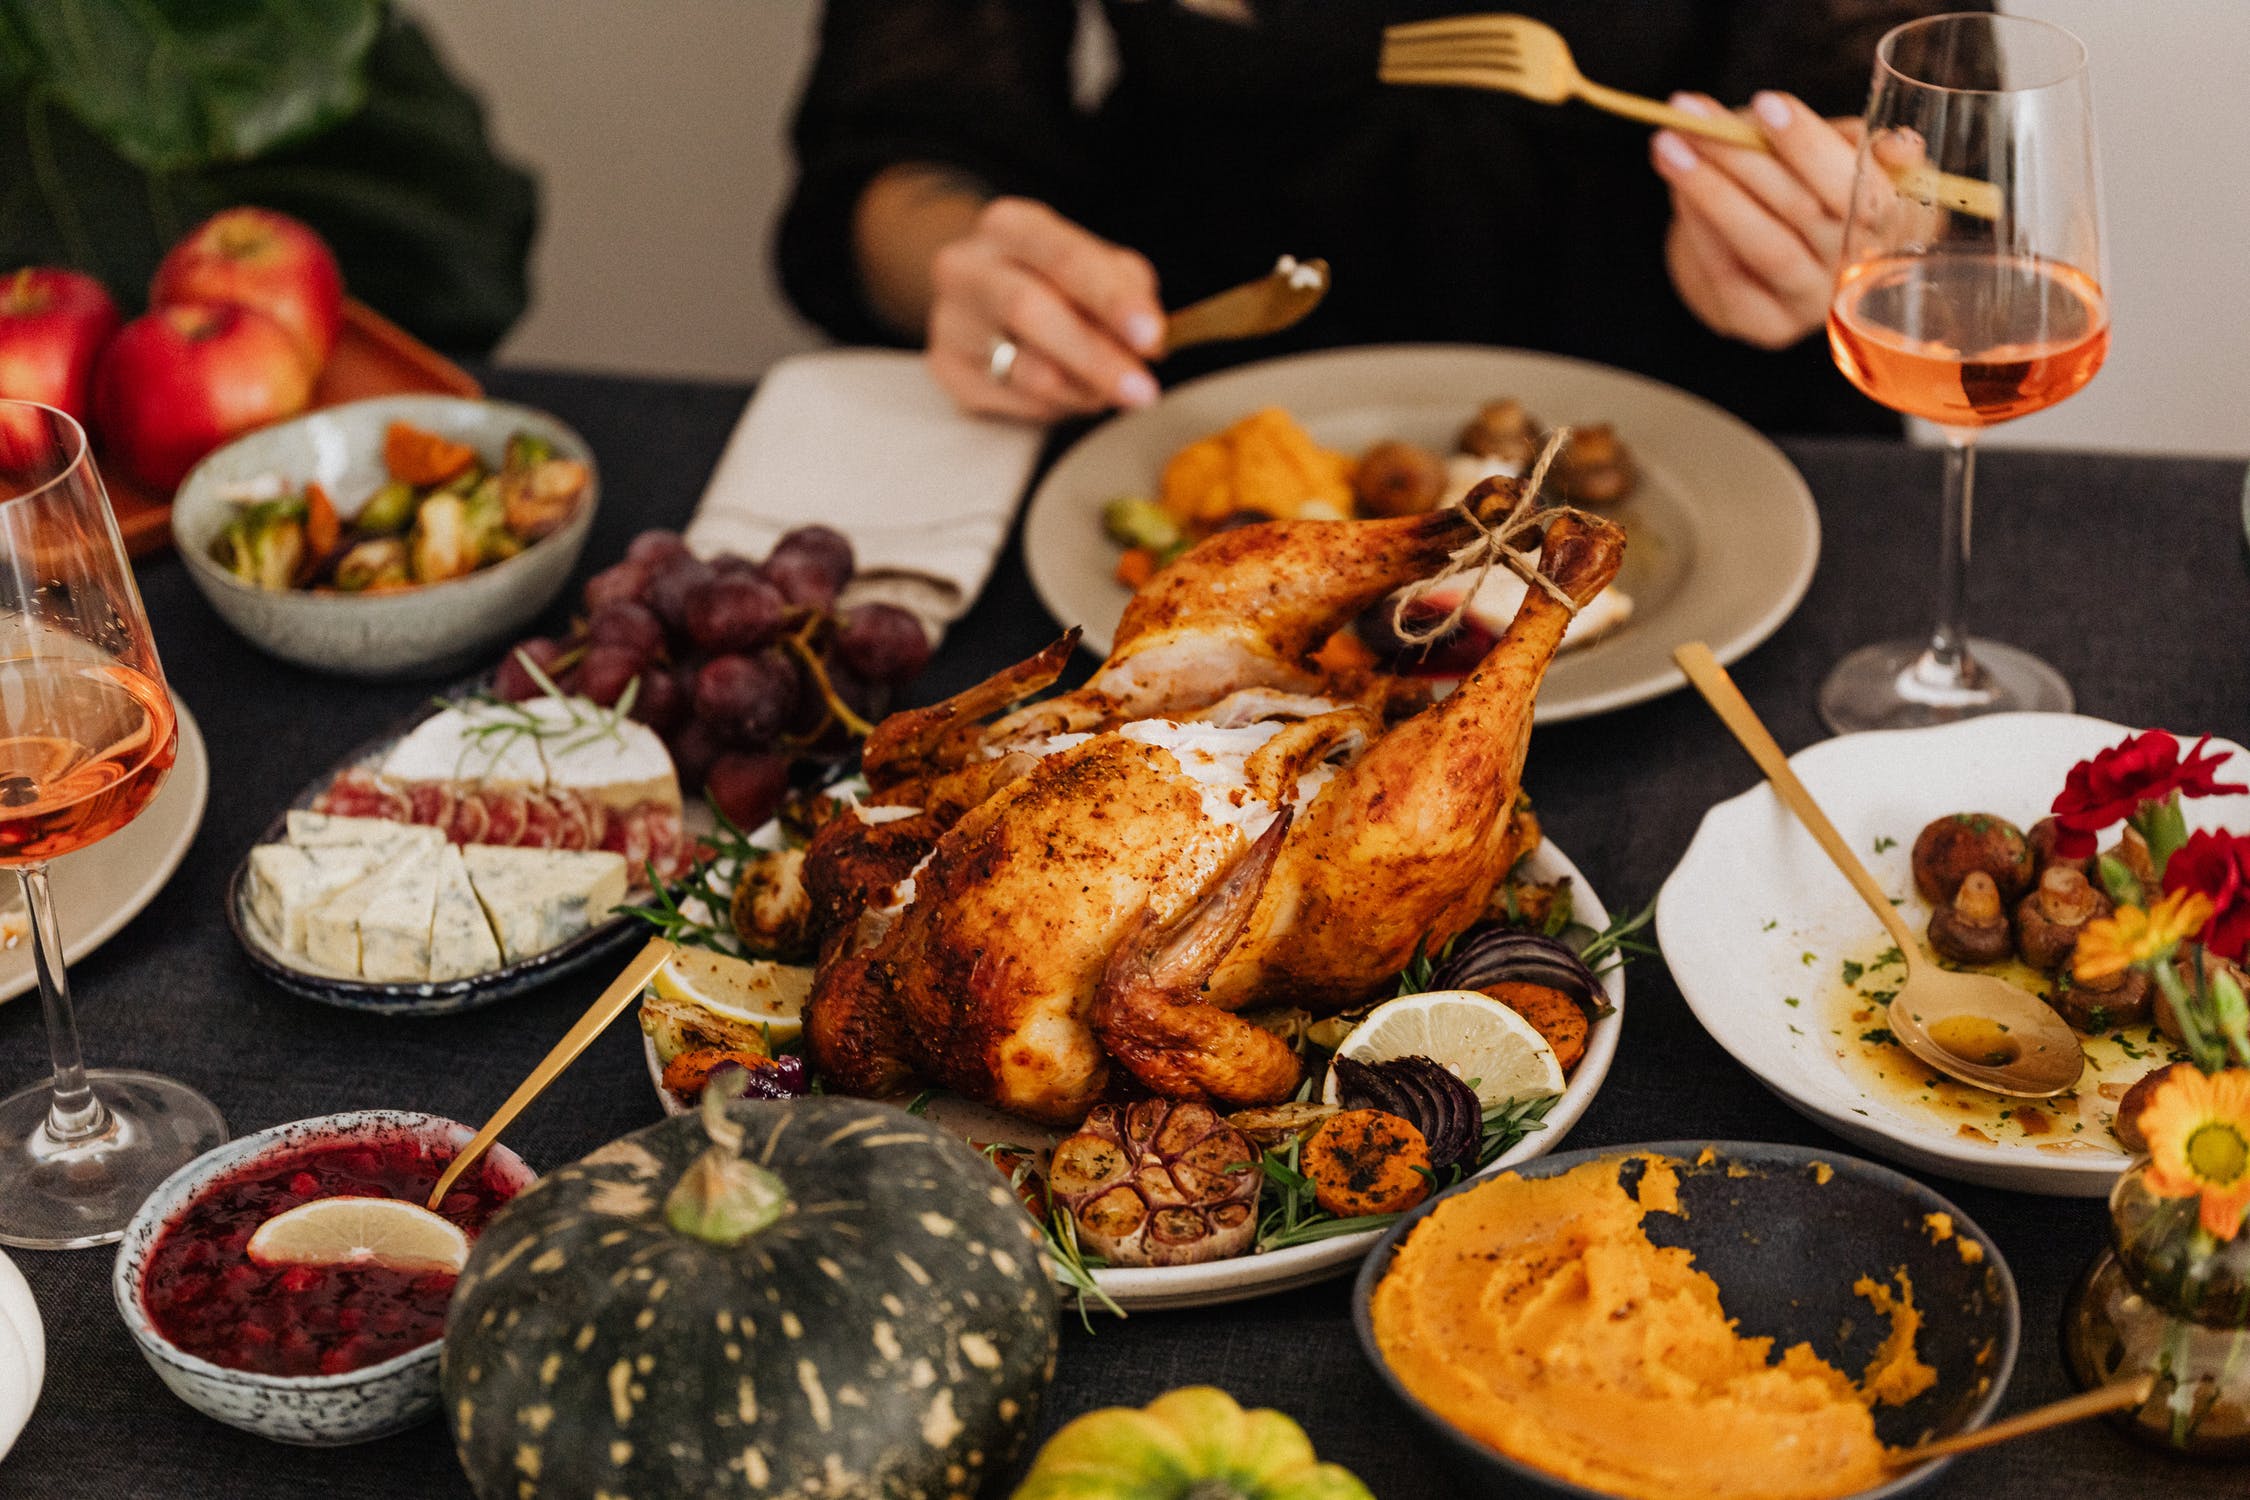 The family had a wonderful time enjoying their turkey | Source: Pexels